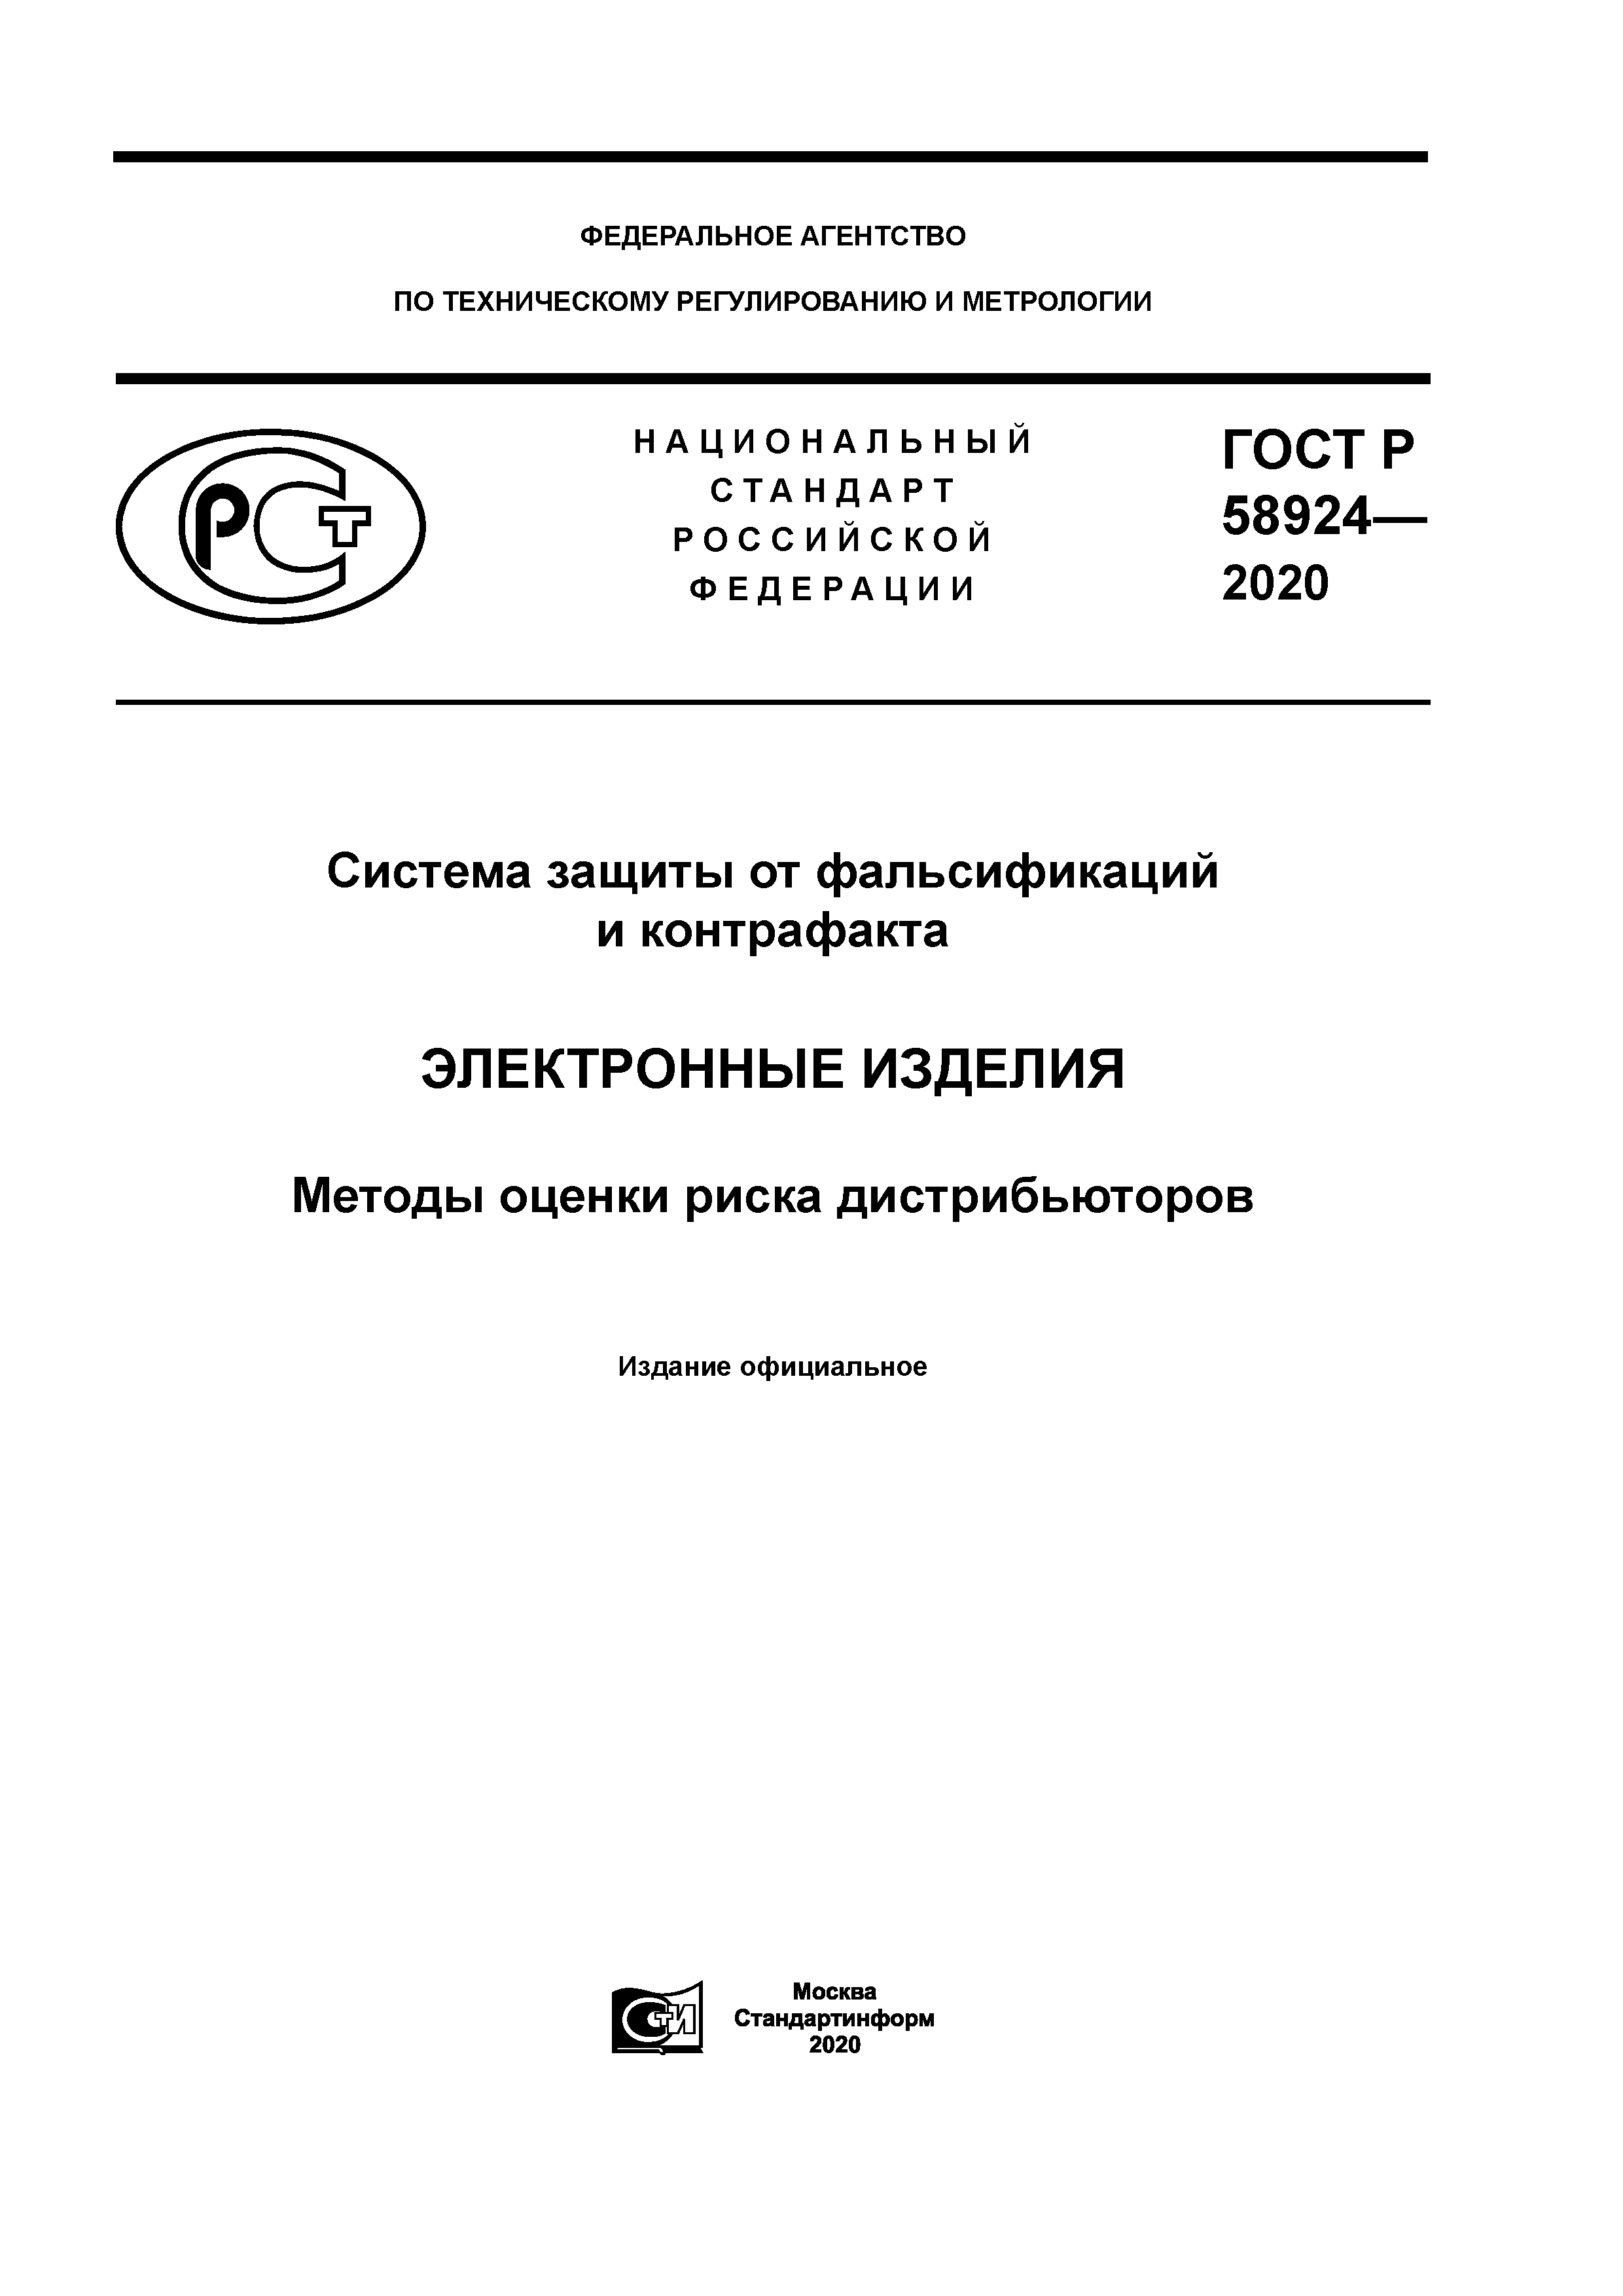 ГОСТ Р 58924-2020